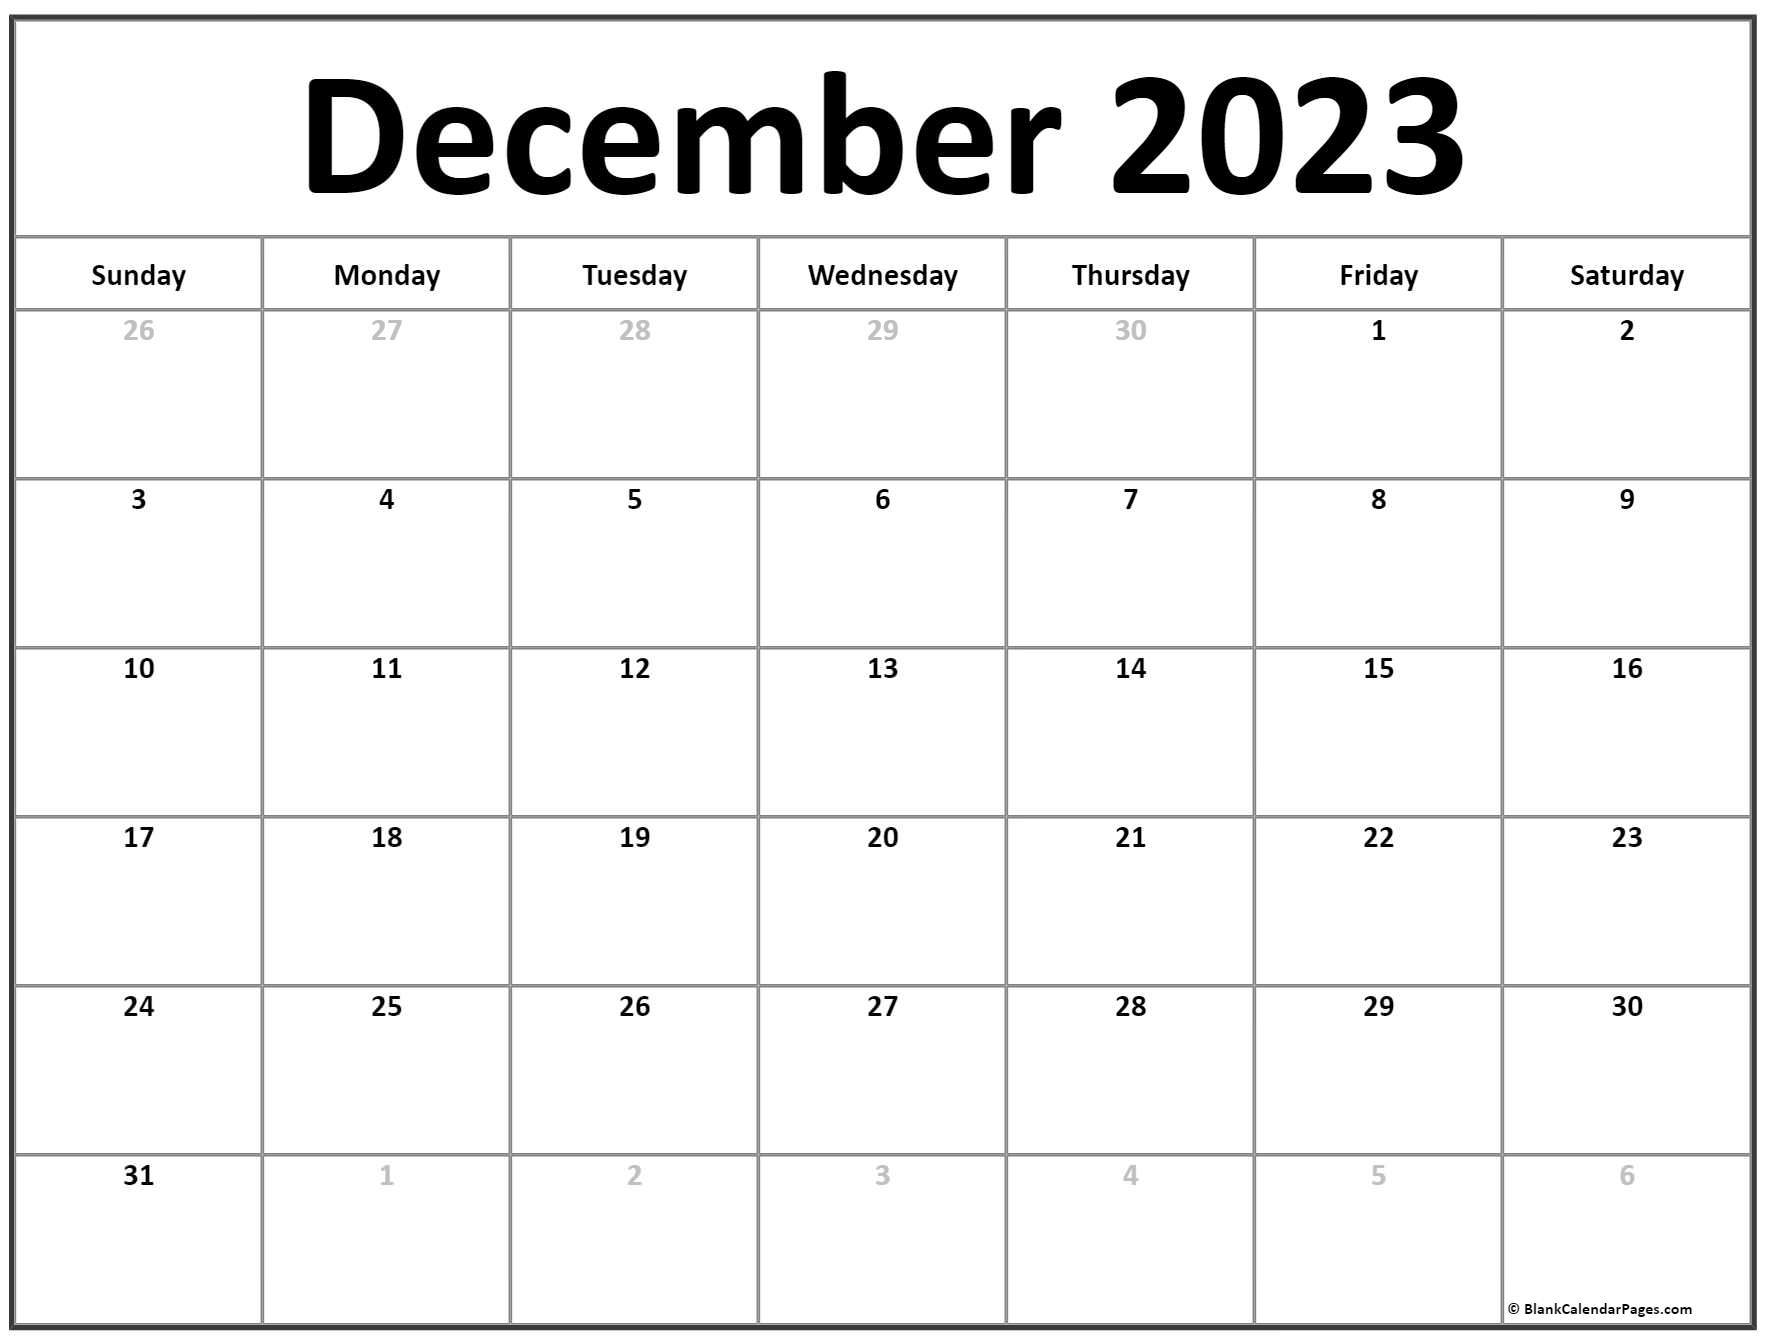 december-2023-calendar-free-printable-calendar-december-2023-calendar-free-printable-calendar